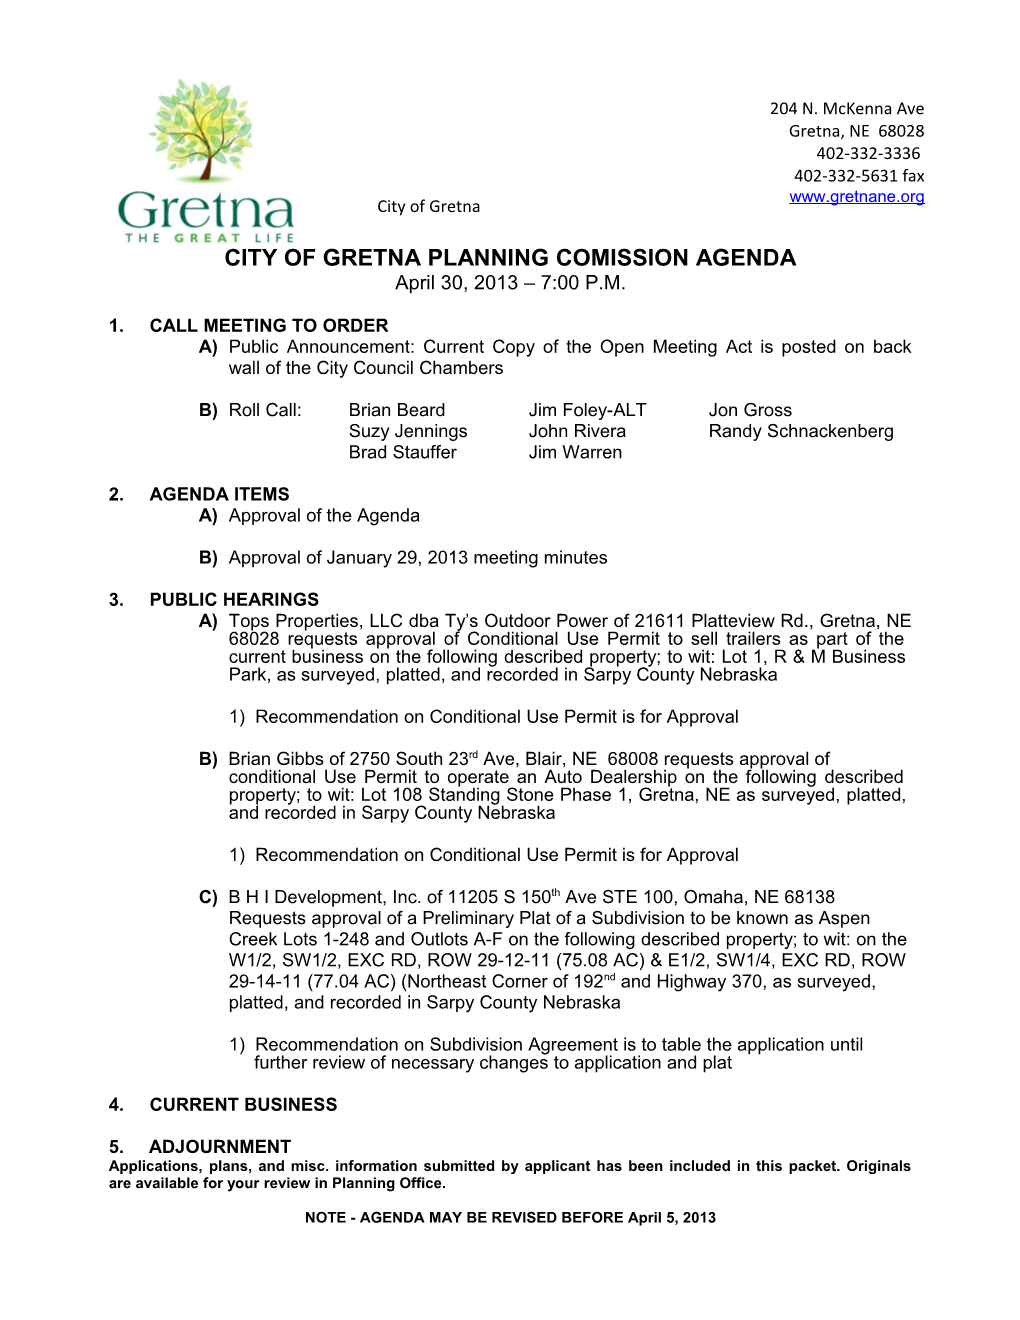 City of Gretna Planning Comission Agenda